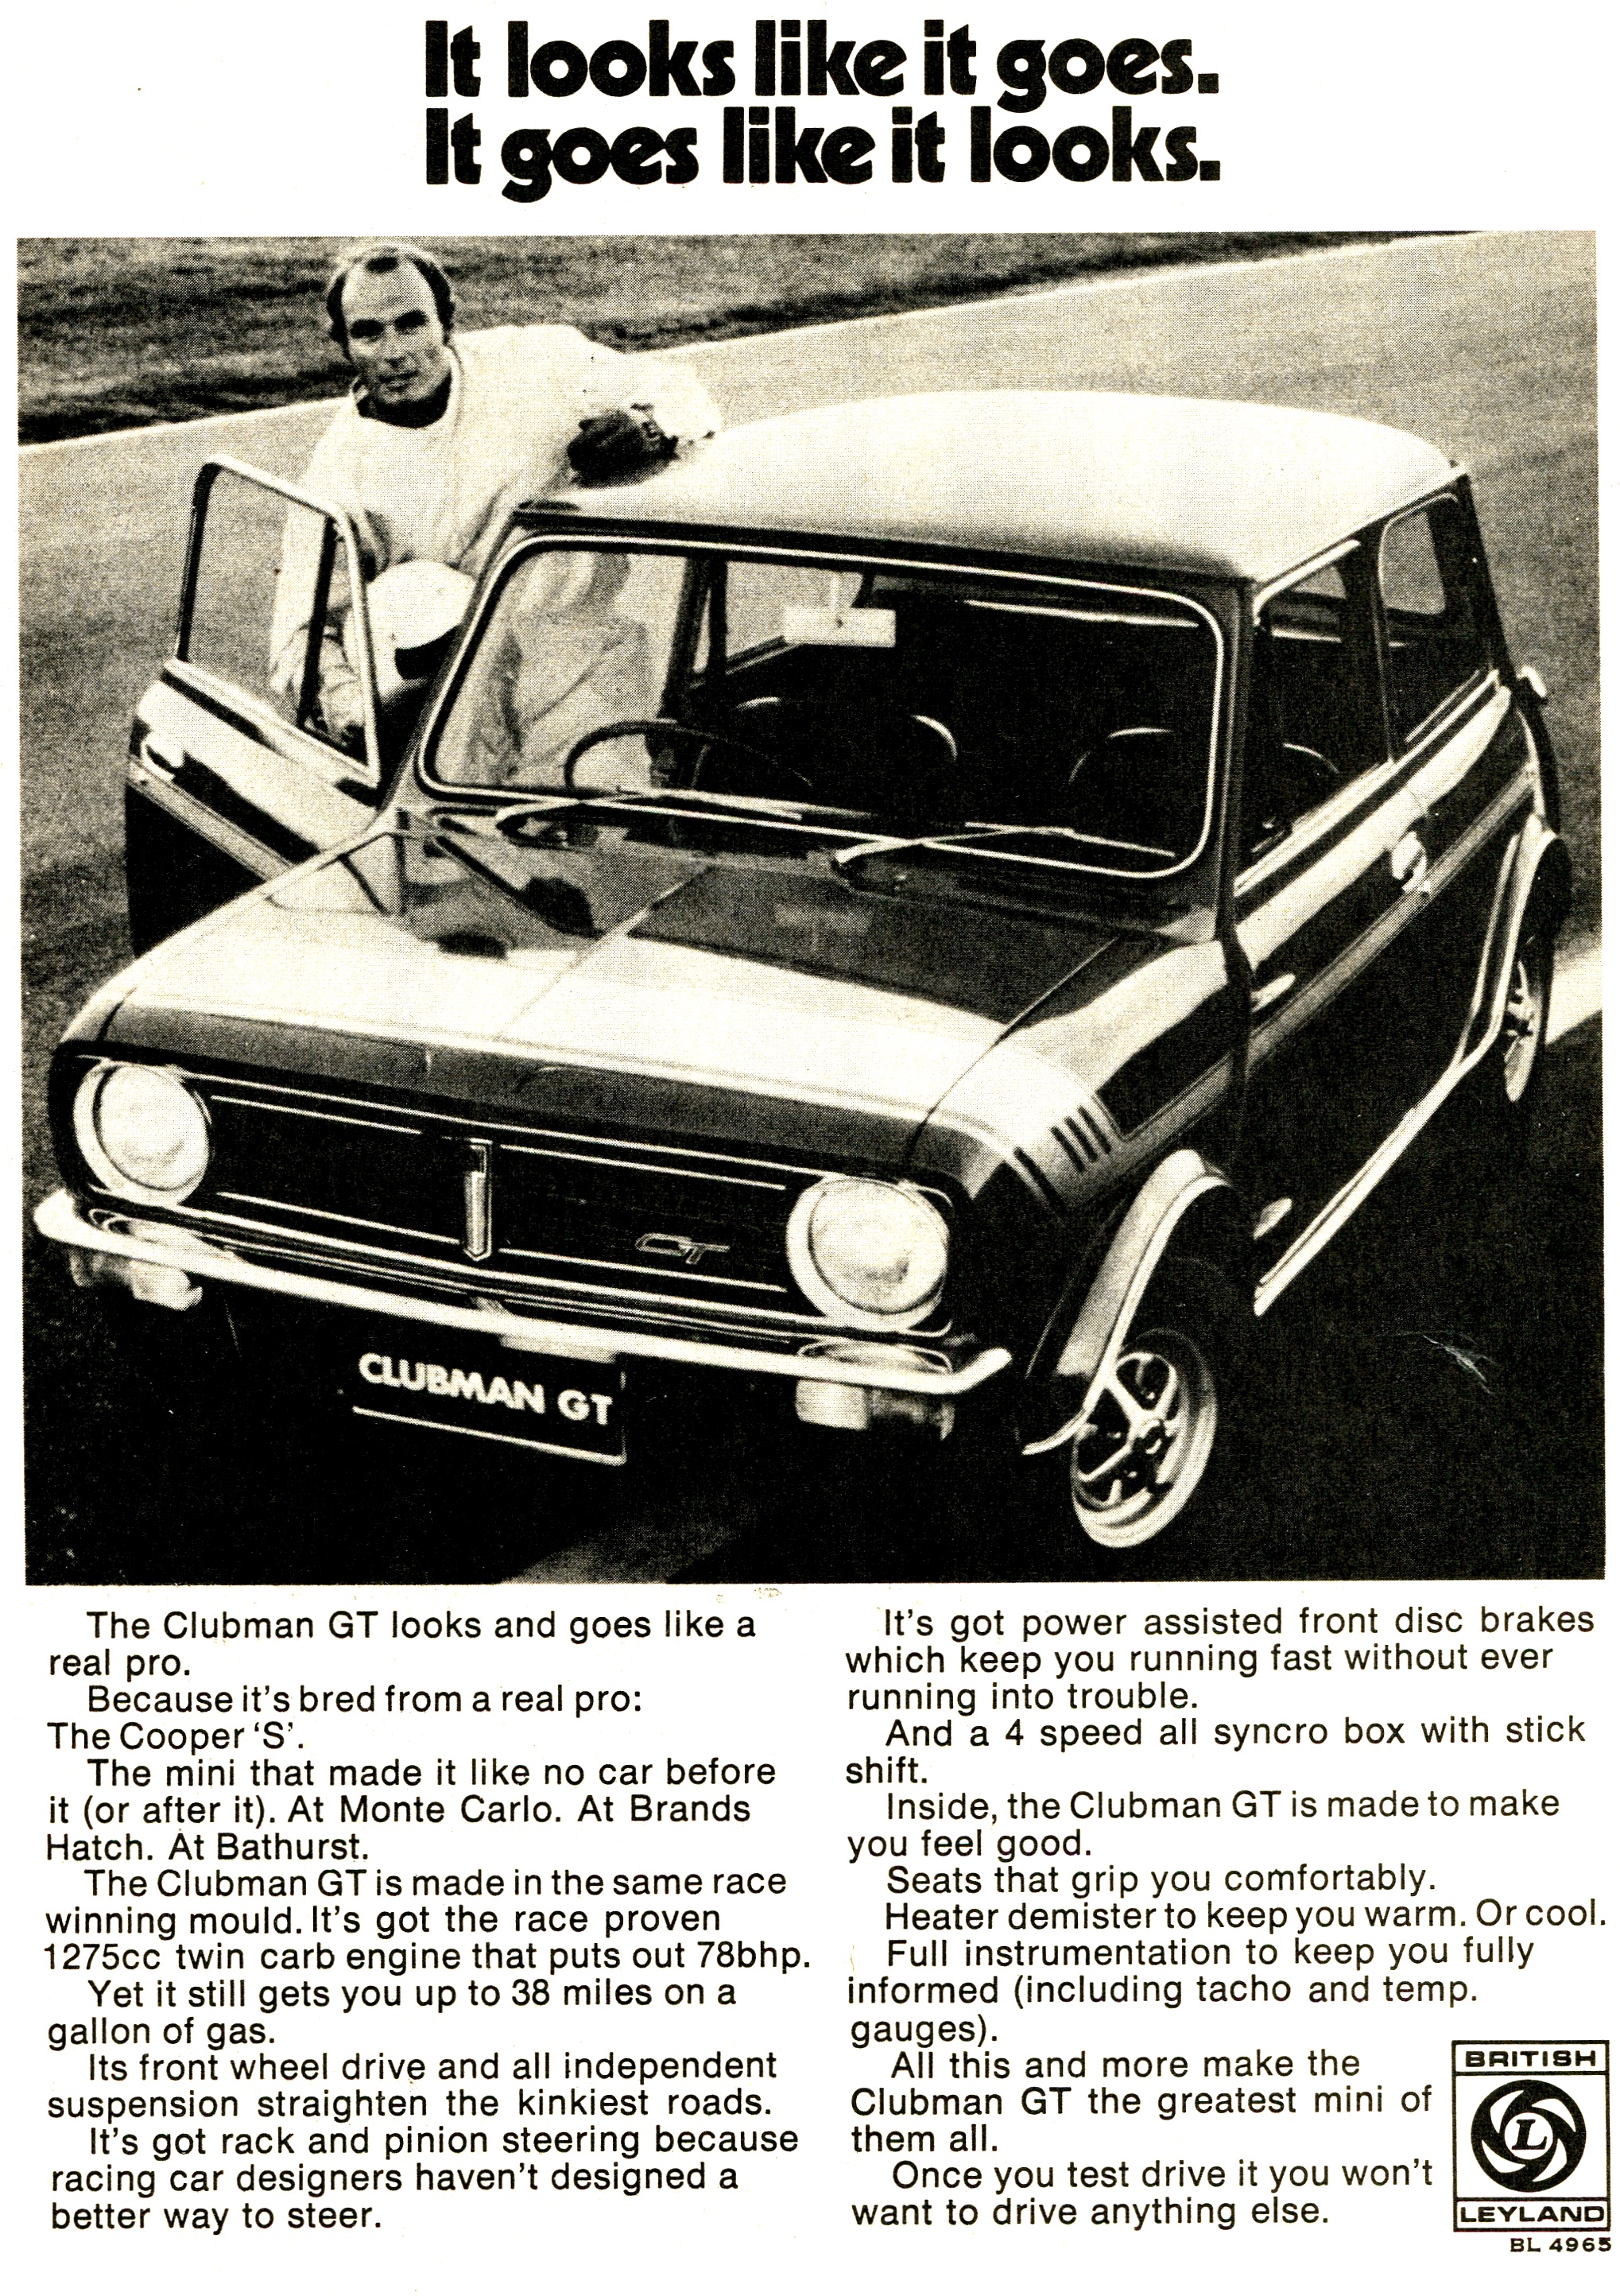 1971 Australian Advertising